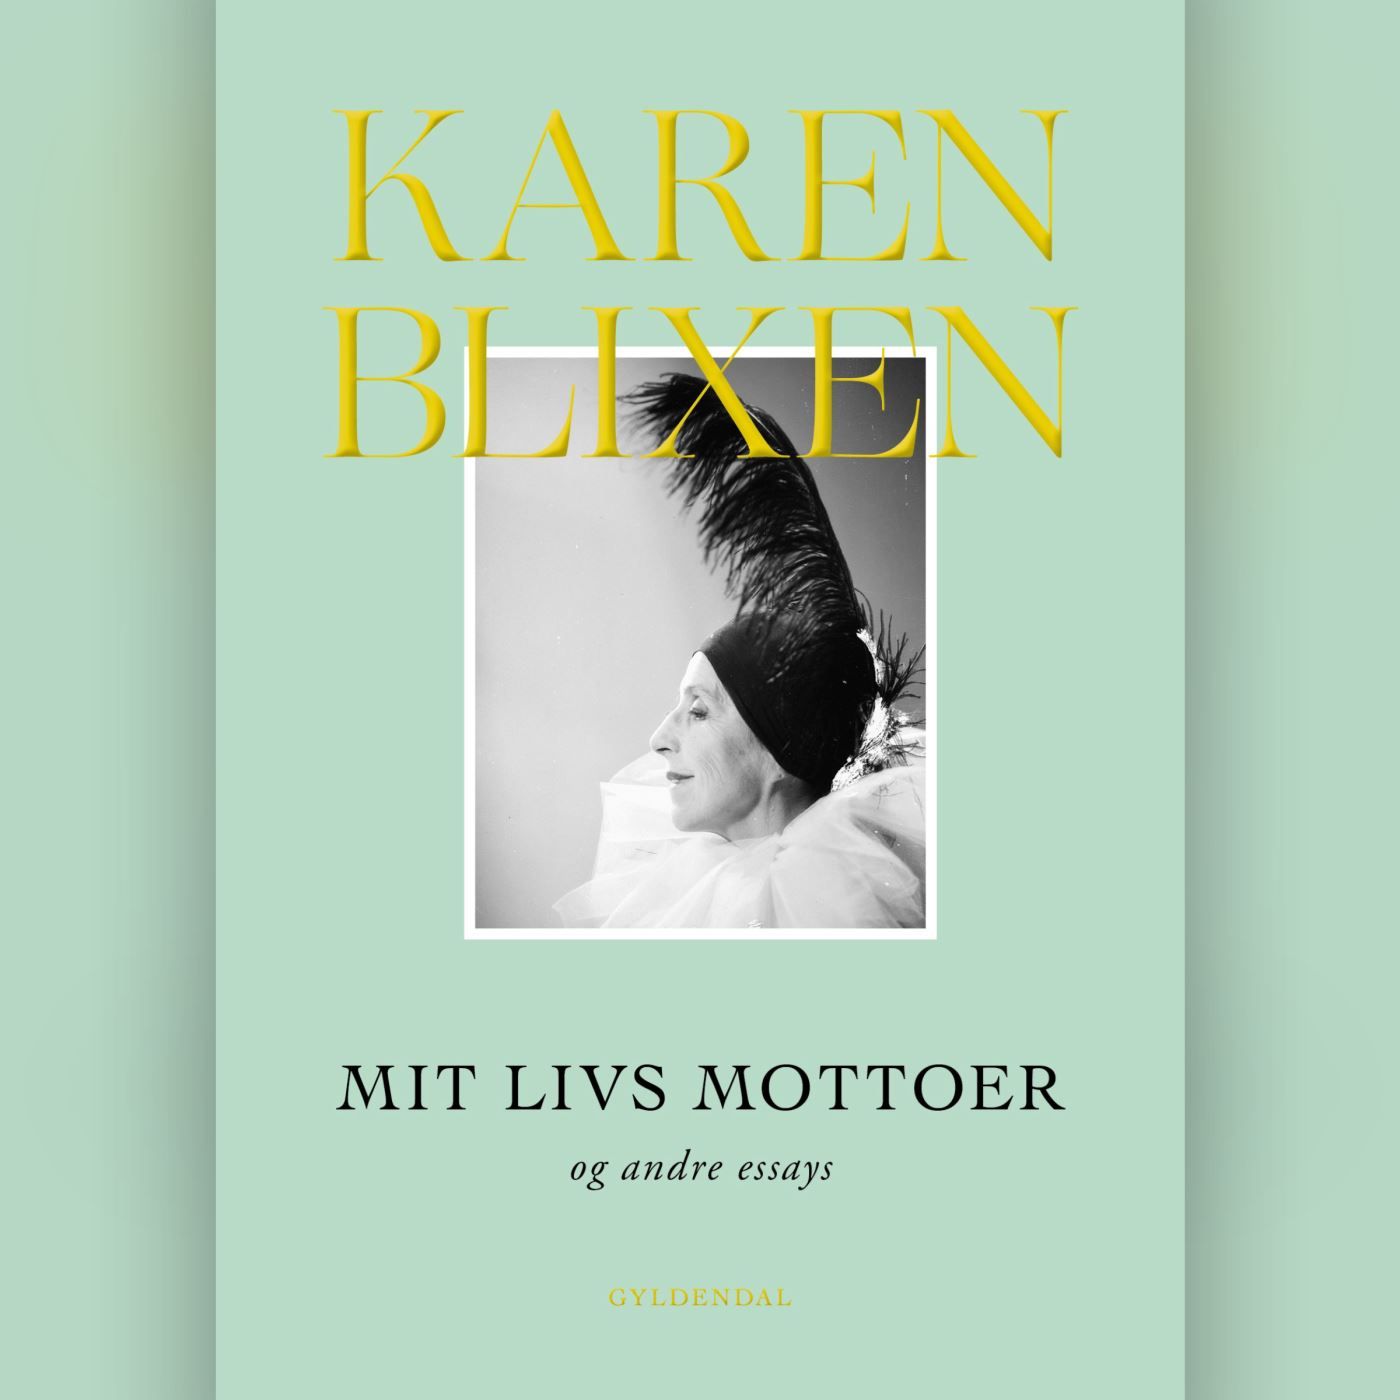 Mit livs mottoer og andre essays, audiobook by Karen Blixen